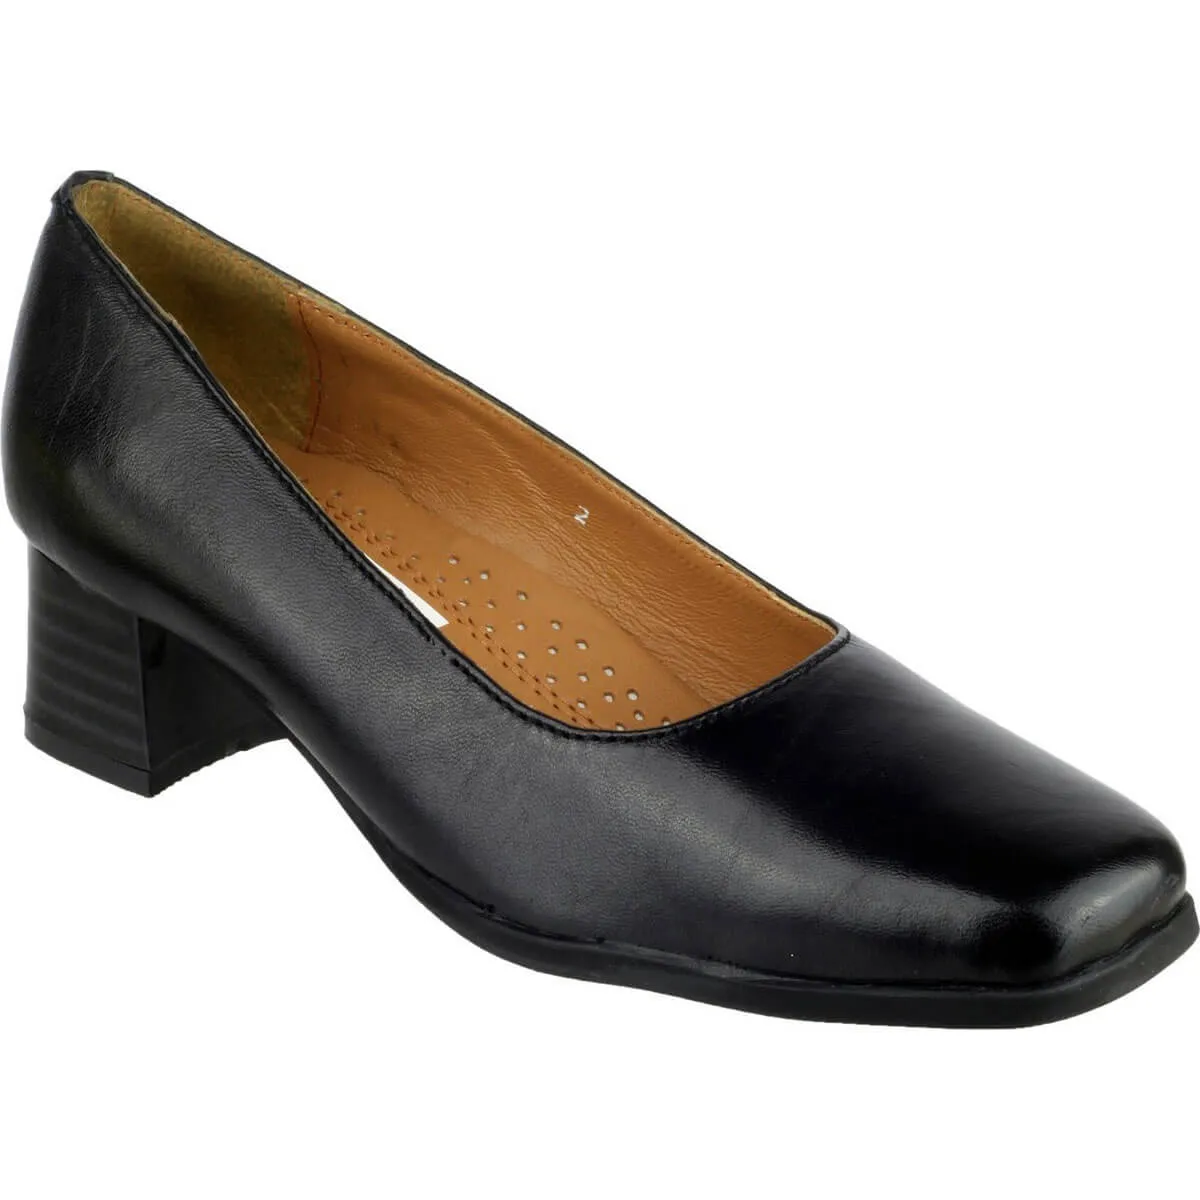 Amblers Walford Ladies Shoes Wide Fit Court - Black, Size 3